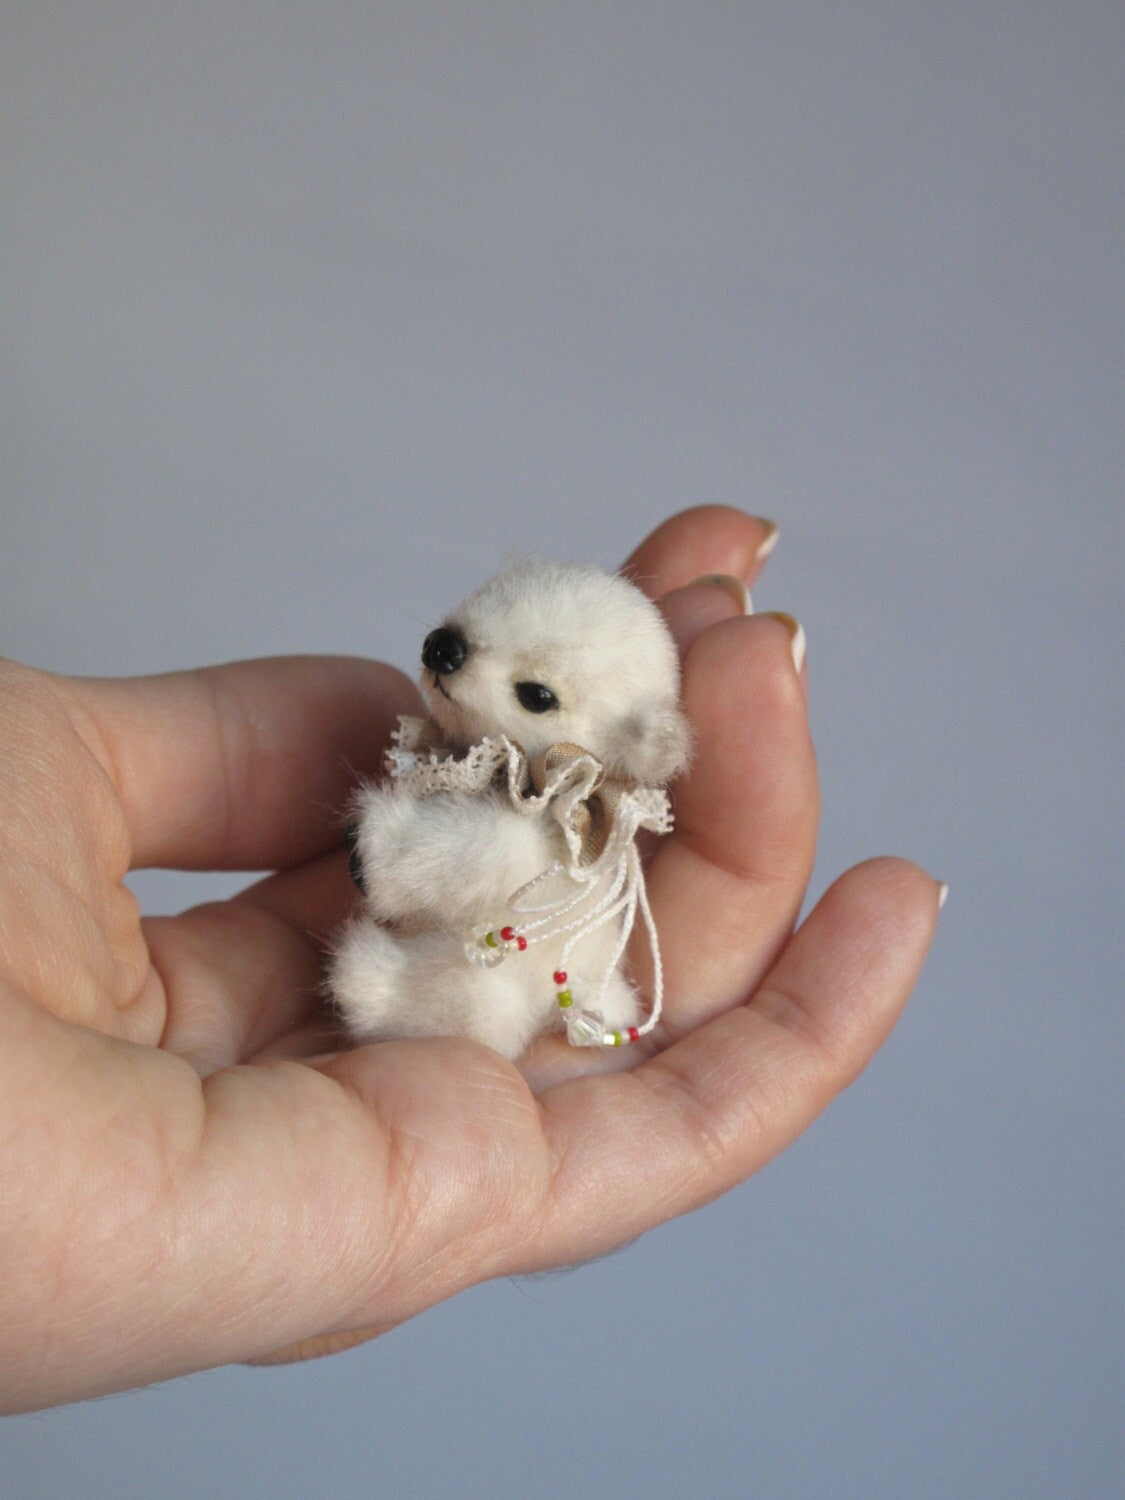 Miniature polar bear PATTERN, how to sew a teddy bear PDF pattern, stuffed toy making, easy stuffed animals to sew, white bear pdf pattern